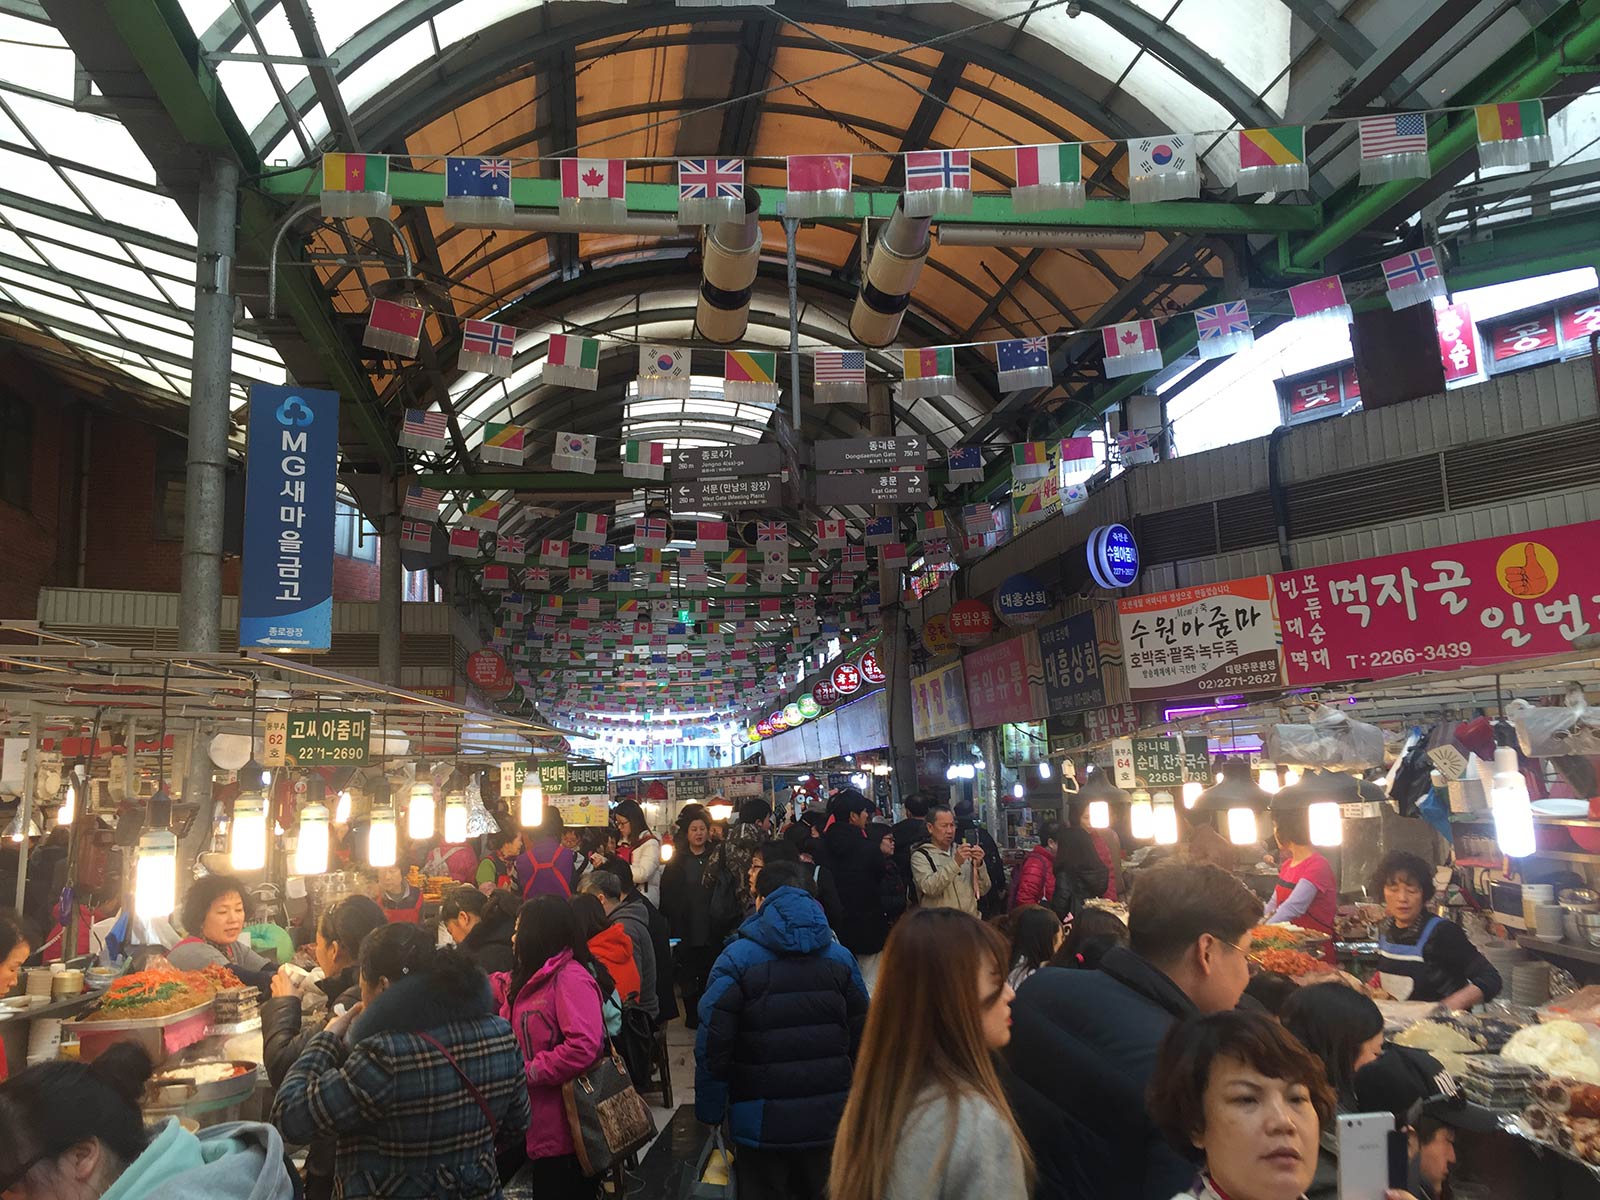 Patrons at food stalls in Seoul, South Korea. Life and Seoul of Korea